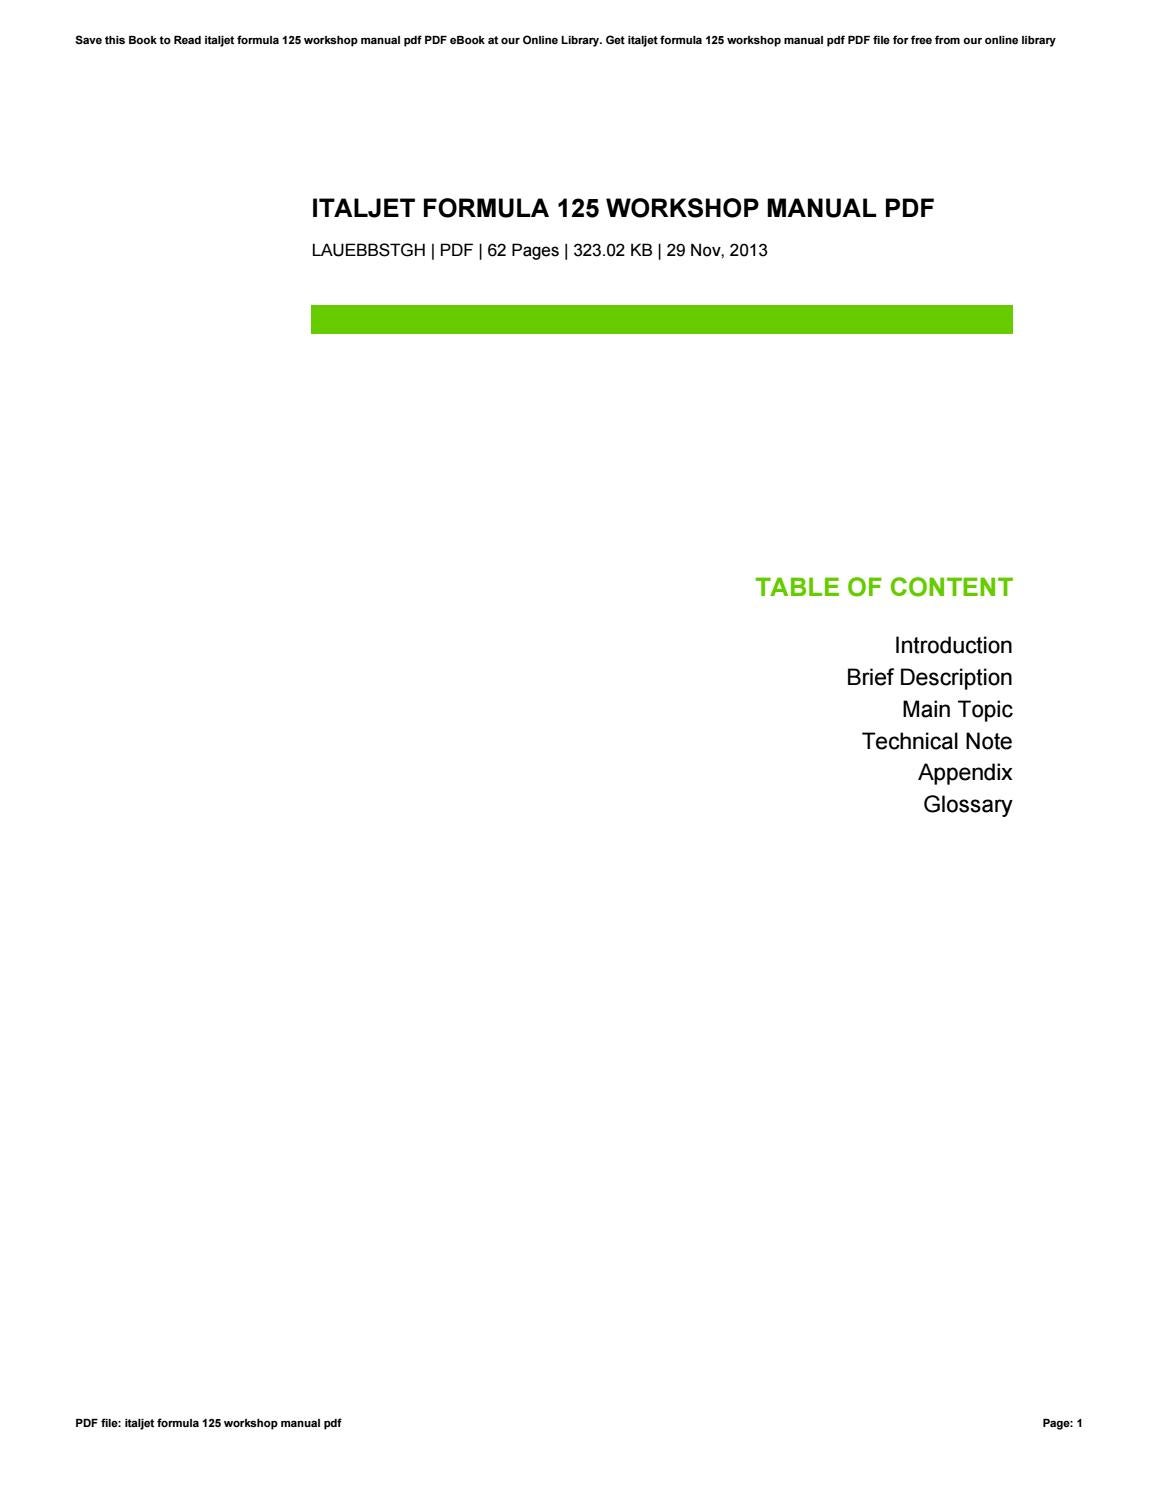 italjet formula 50 manual pdf